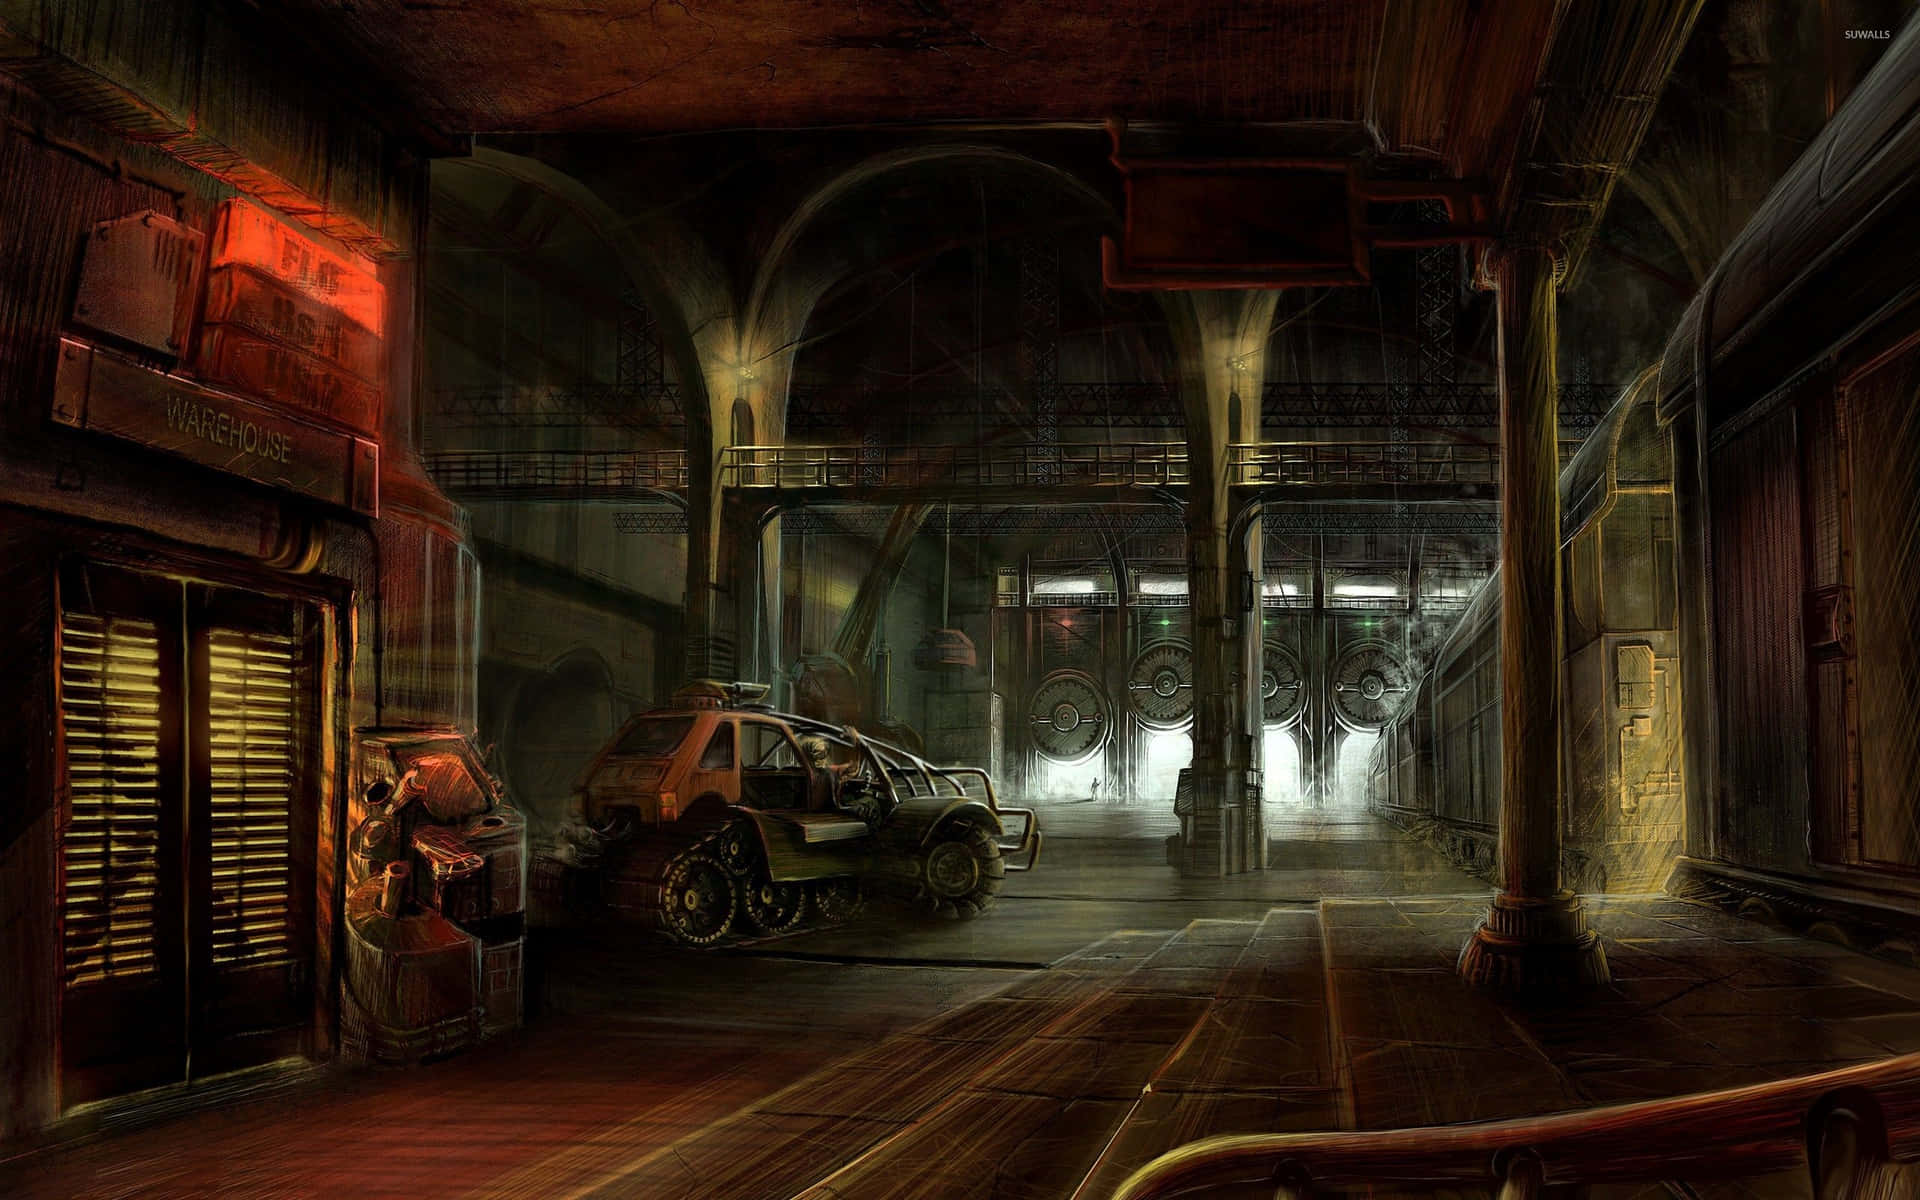 A Dark Scene With A Train And A Car